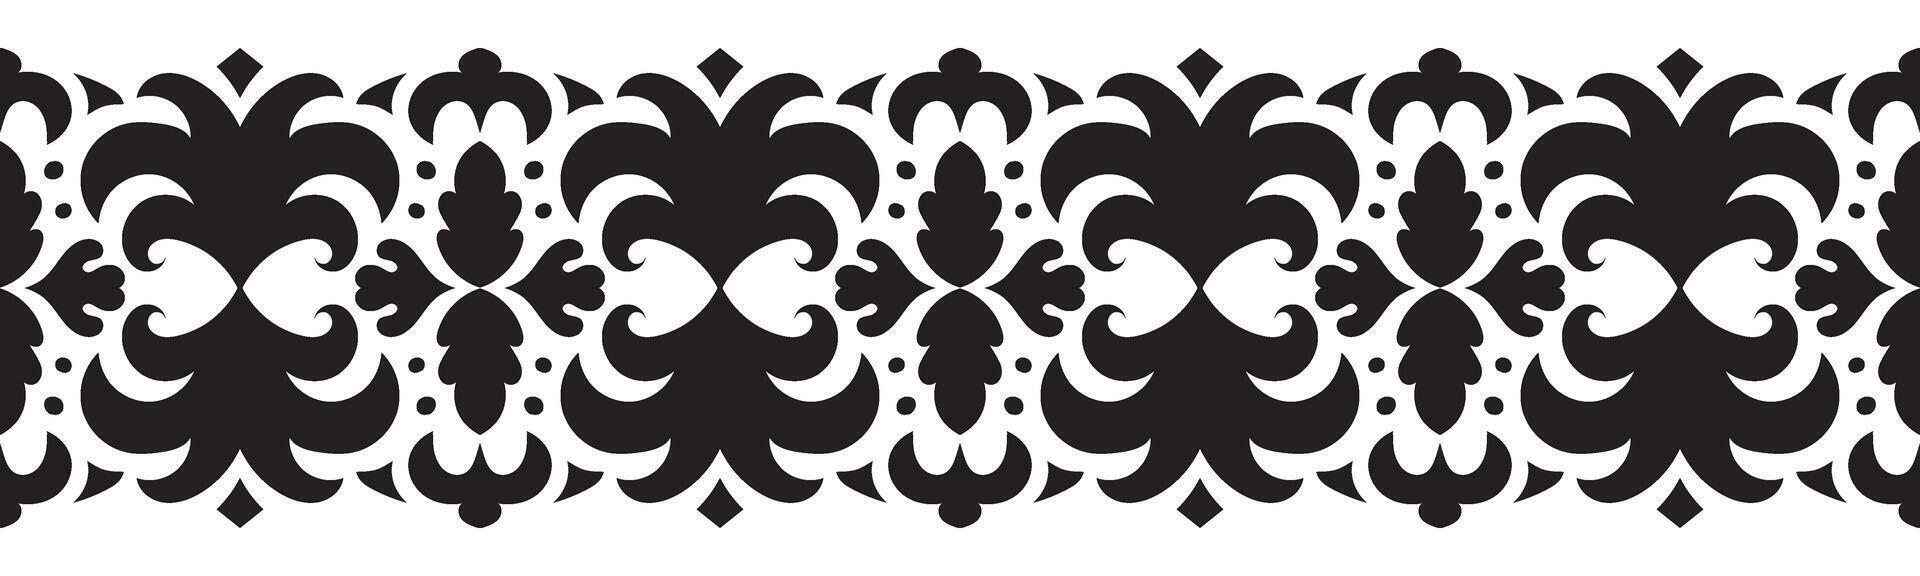 Ethnic seamless border pattern. Ornament illustration. Classic ornate element. Baroque floral vintage style. Decorative border design for frame, textile, fabric, clothing, carpet, curtain, rug. vector